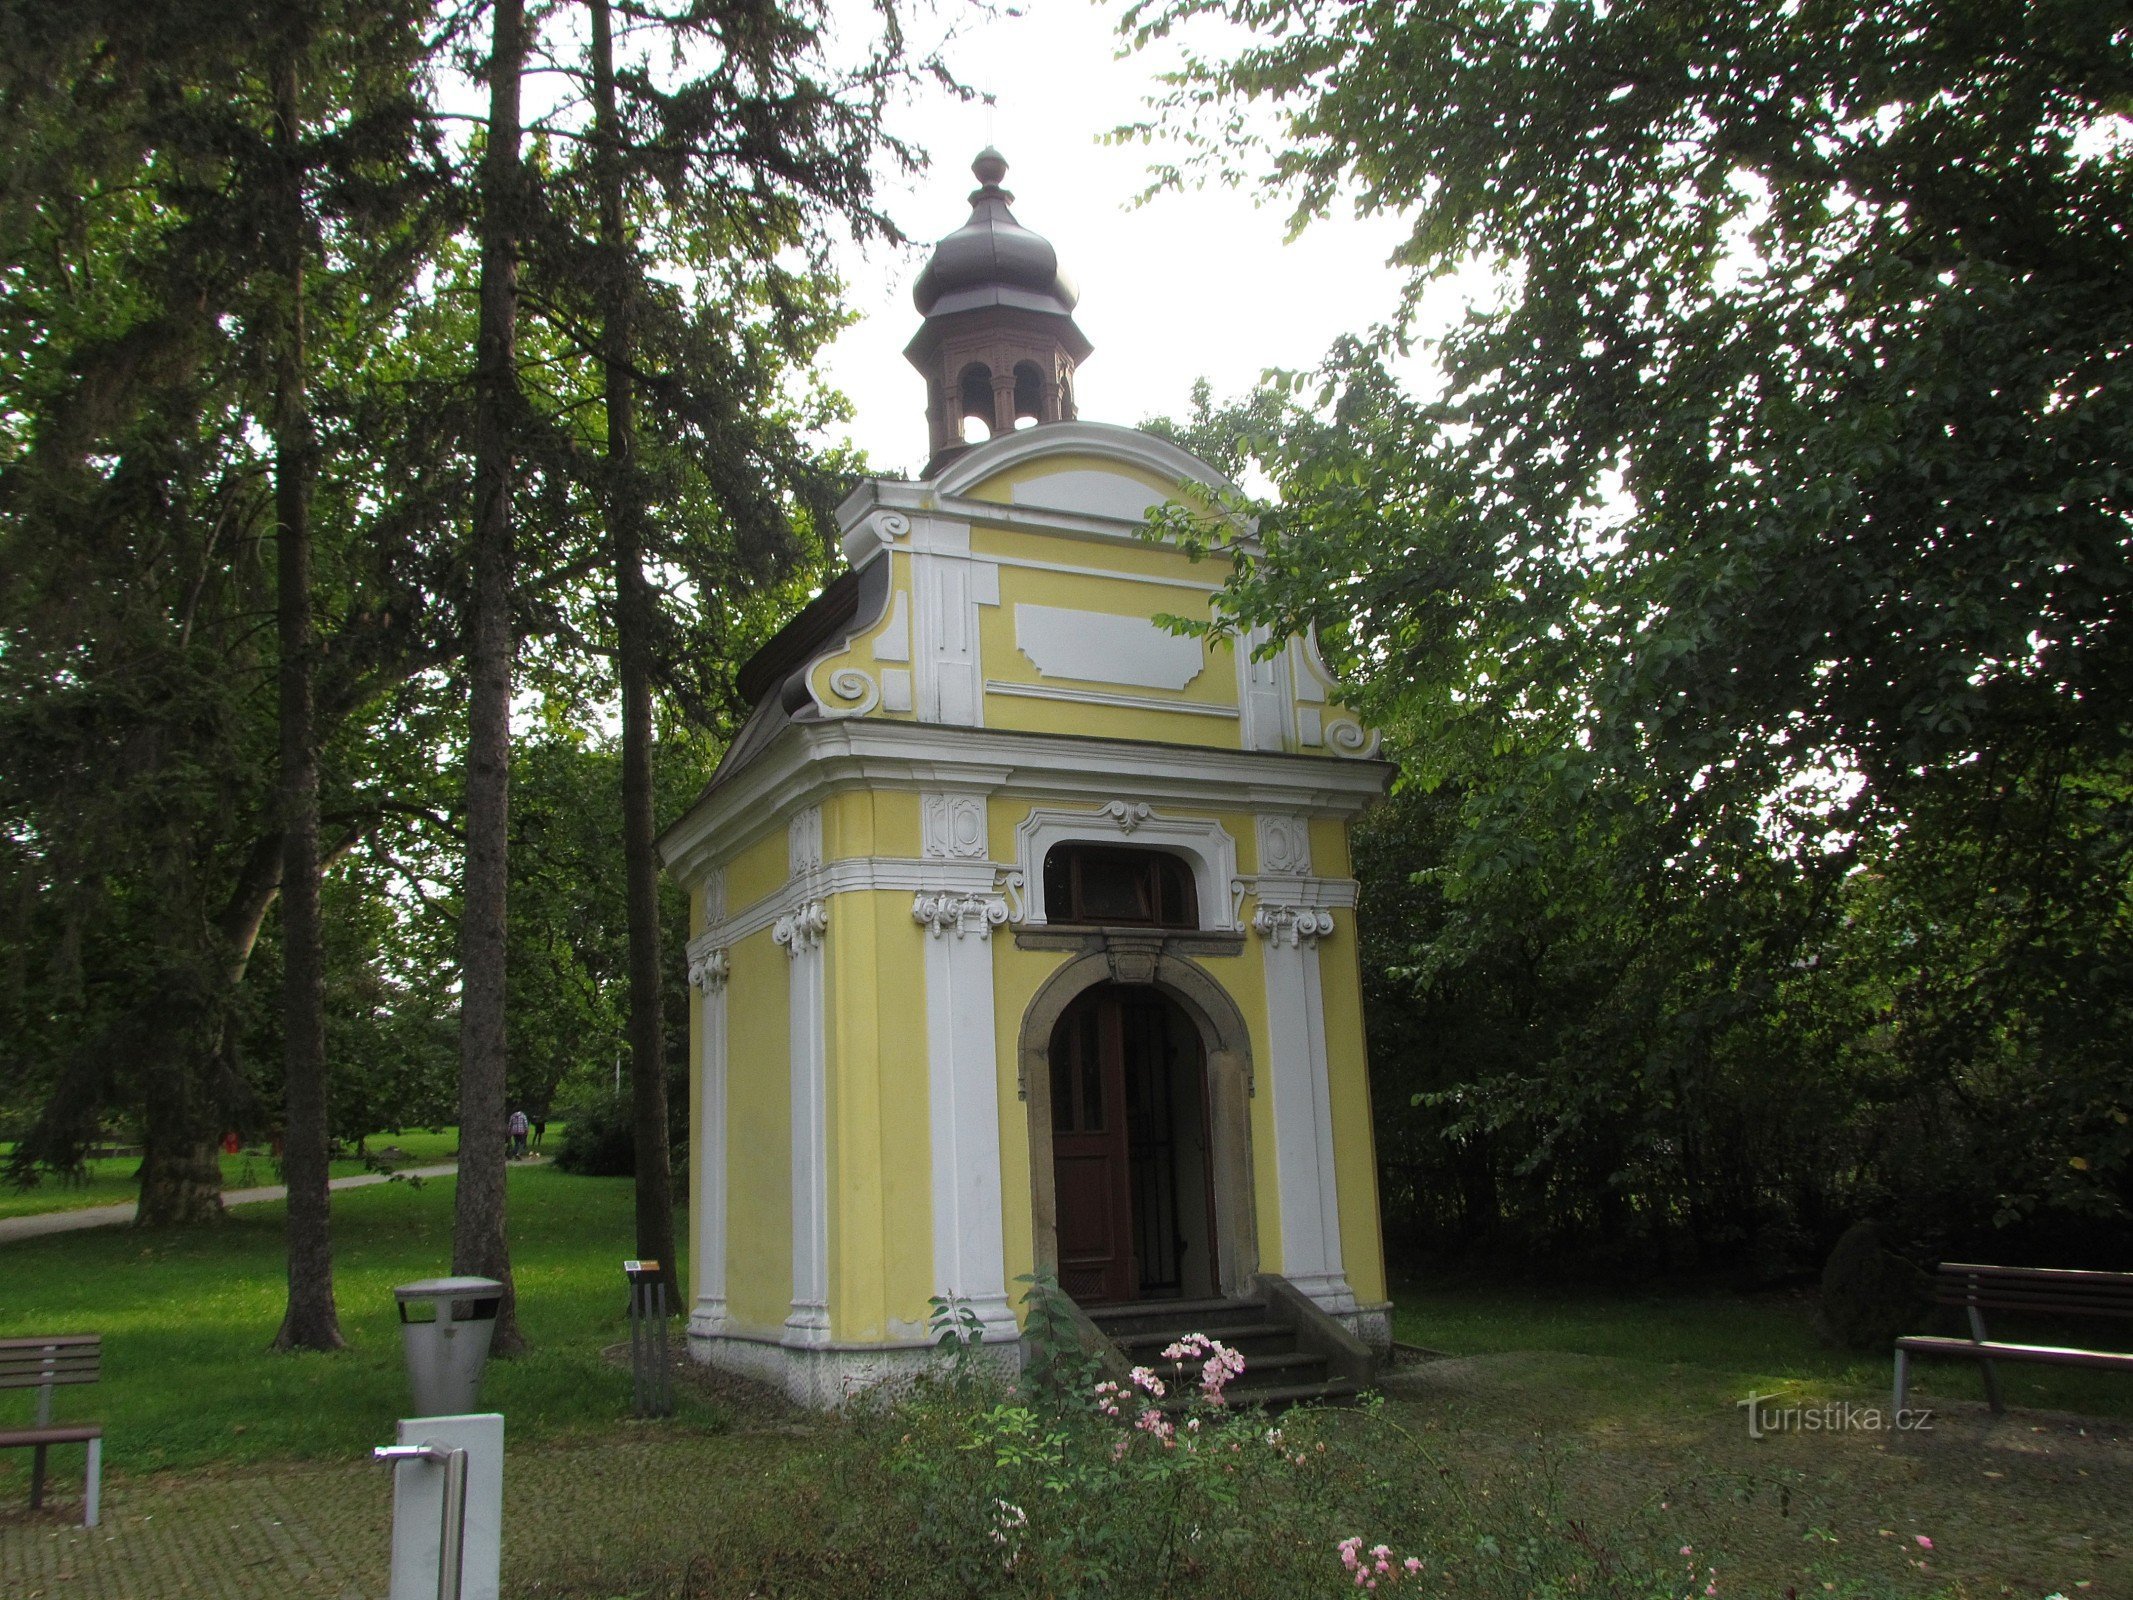 Novojičín Chapel of the Holy Cross